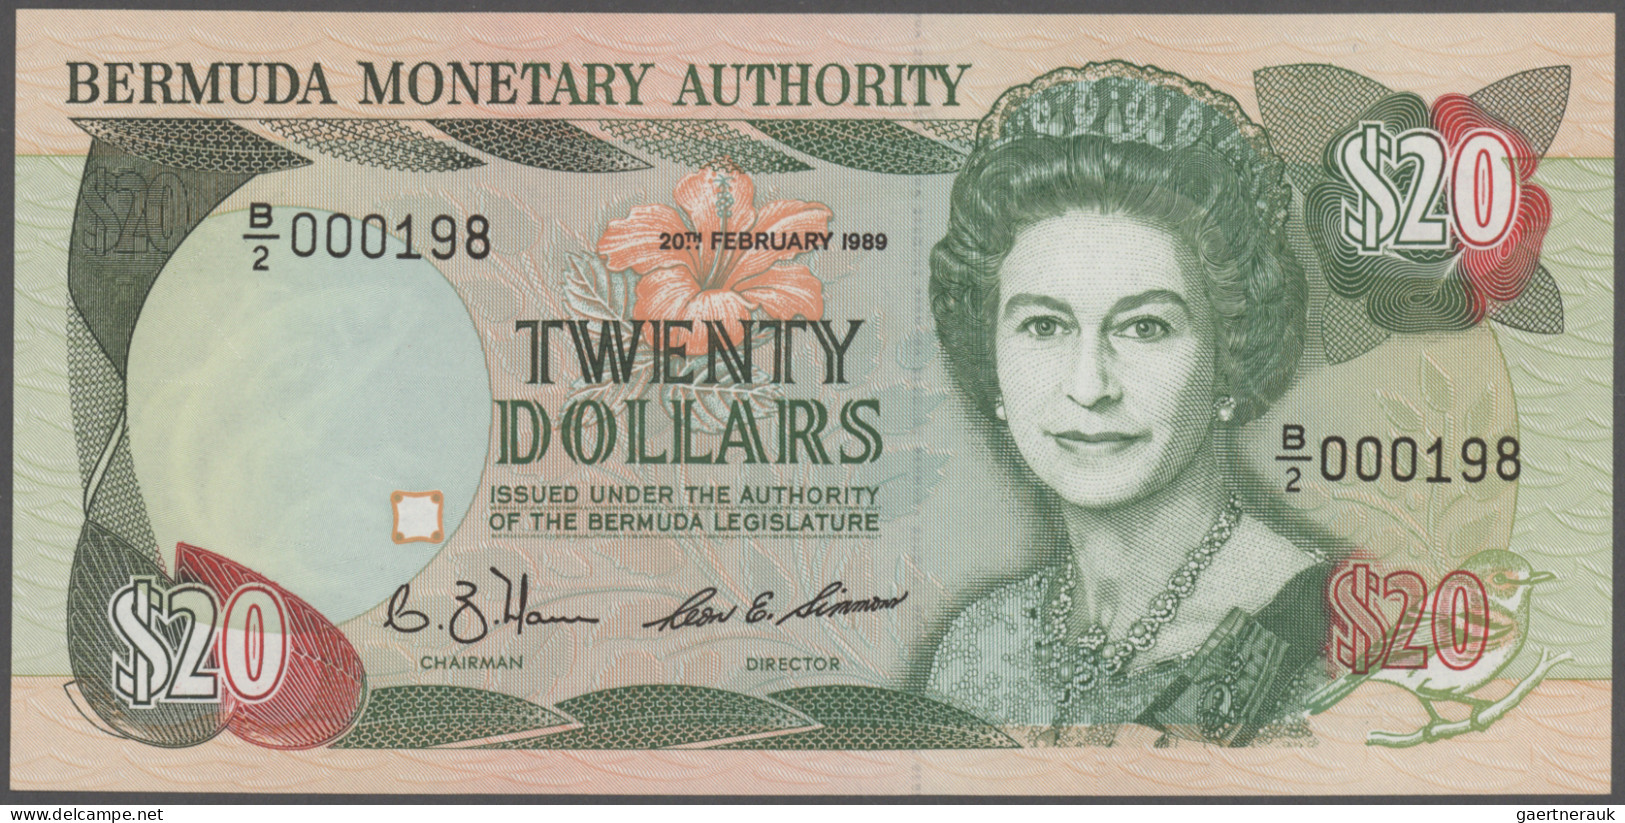 Bermuda: Bermuda Monetary Authority 20 Dollars 1989 With Low Serial # B/2 000198 - Bermudes